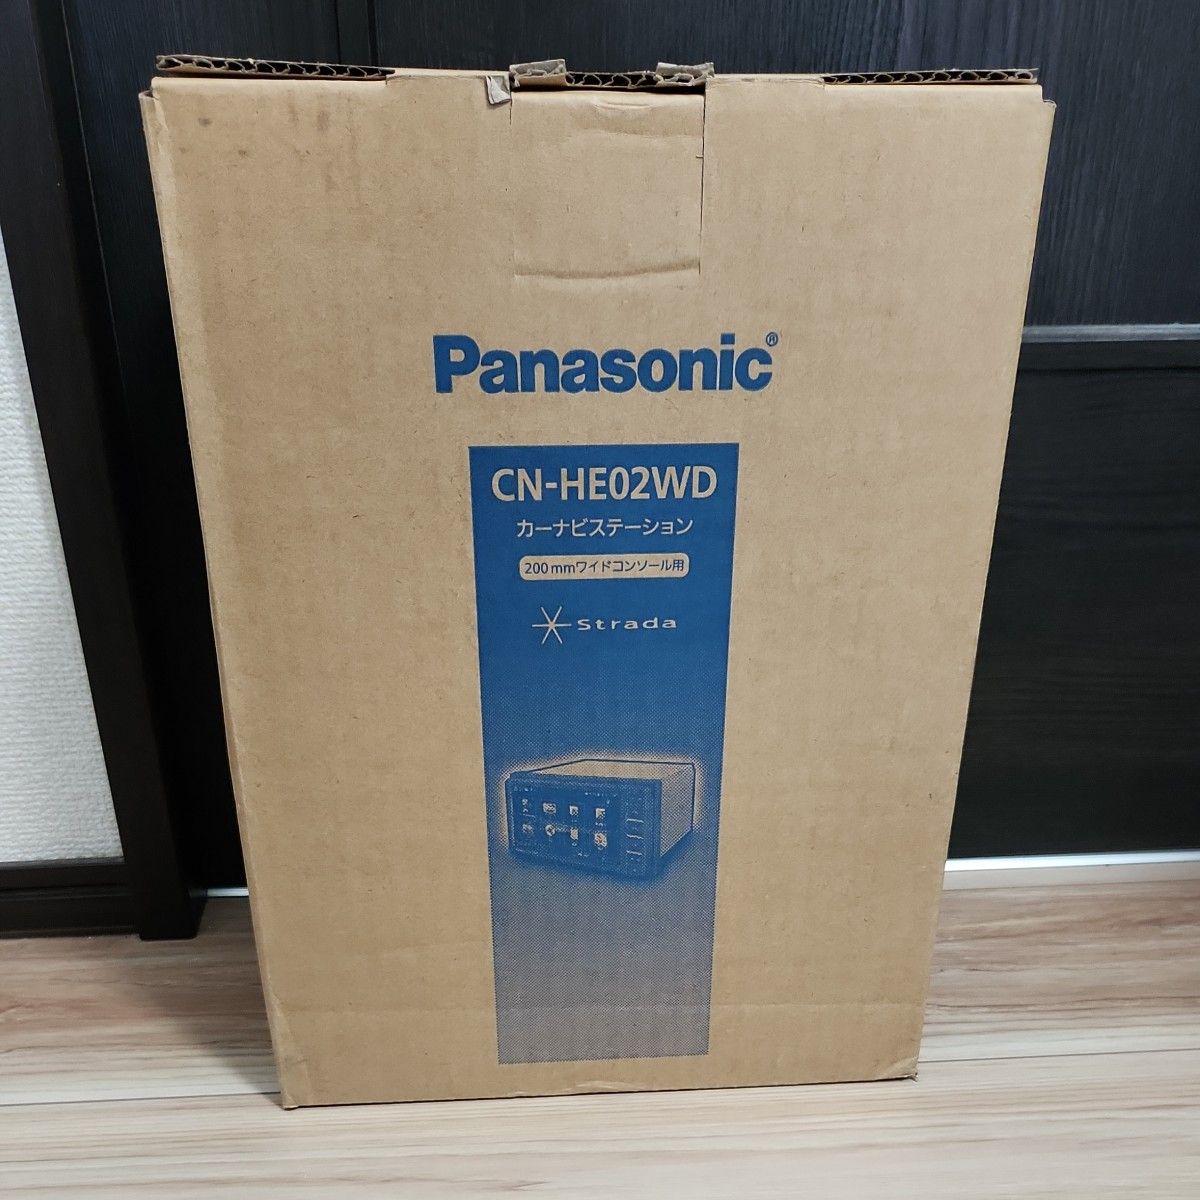 Panasonic CN-HE02WD